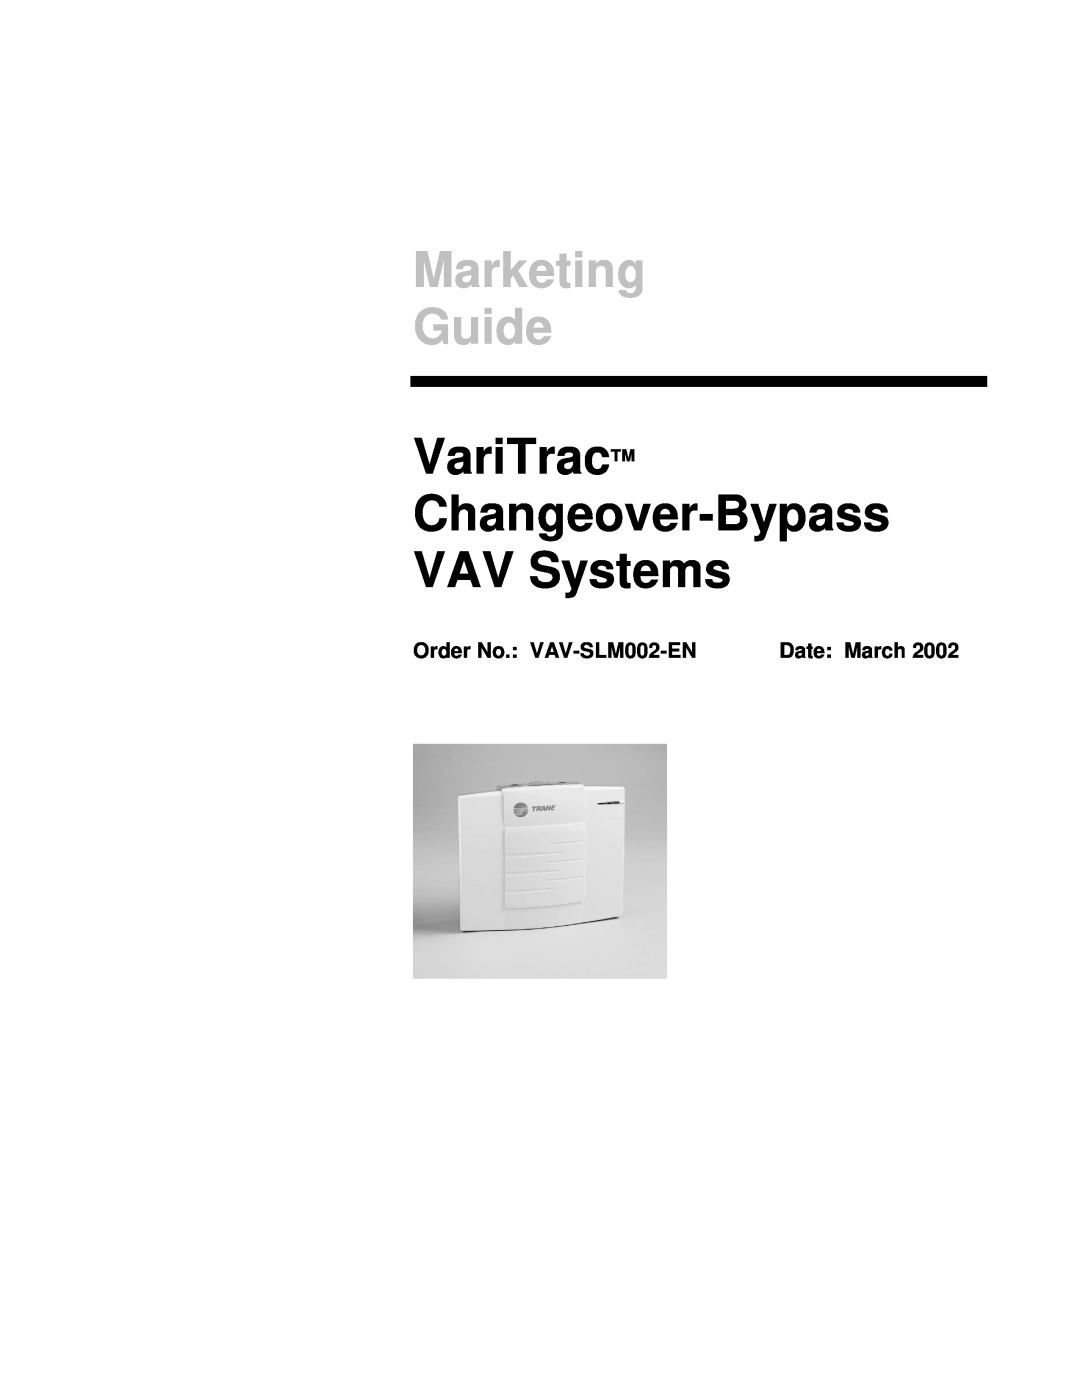 Trane VariTrac Changeover-Bypass VAV Systems manual Order No. VAV-SLM002-EN, Date March, Marketing Guide 